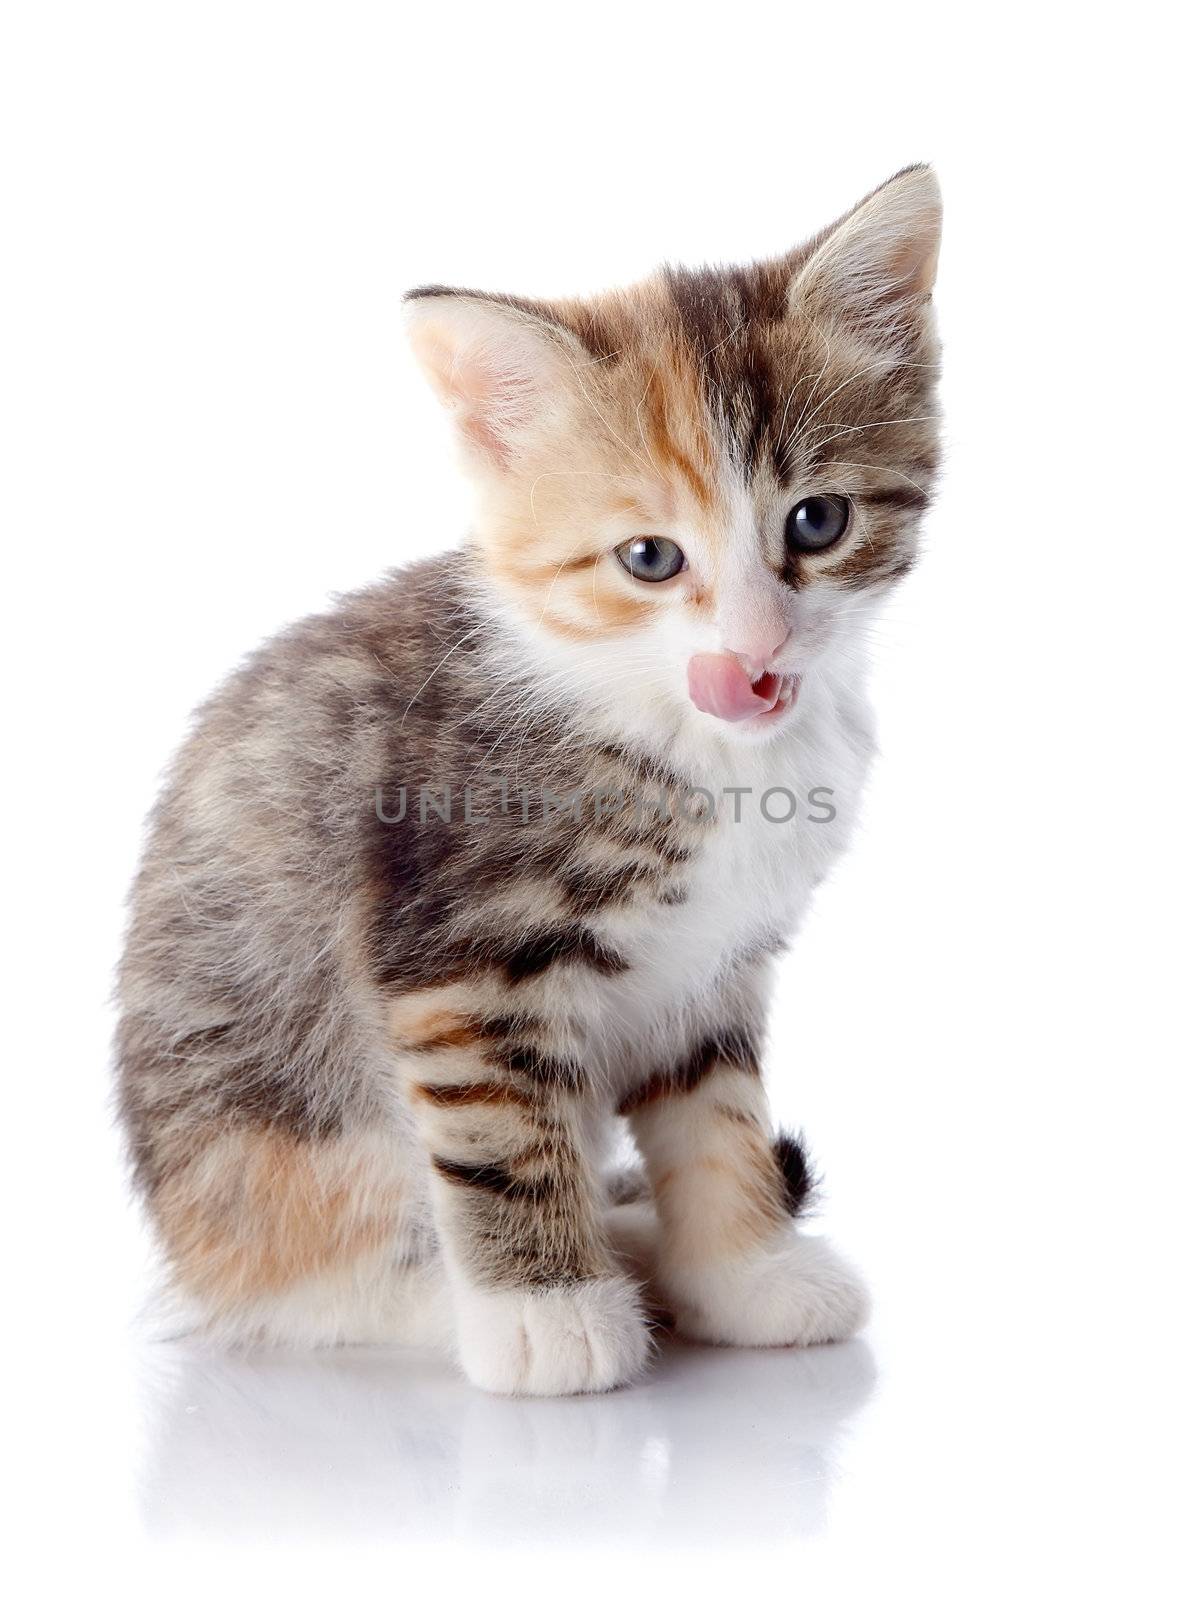 Multi-colored licking lips kitten. Kitten on a white background. Small predator.